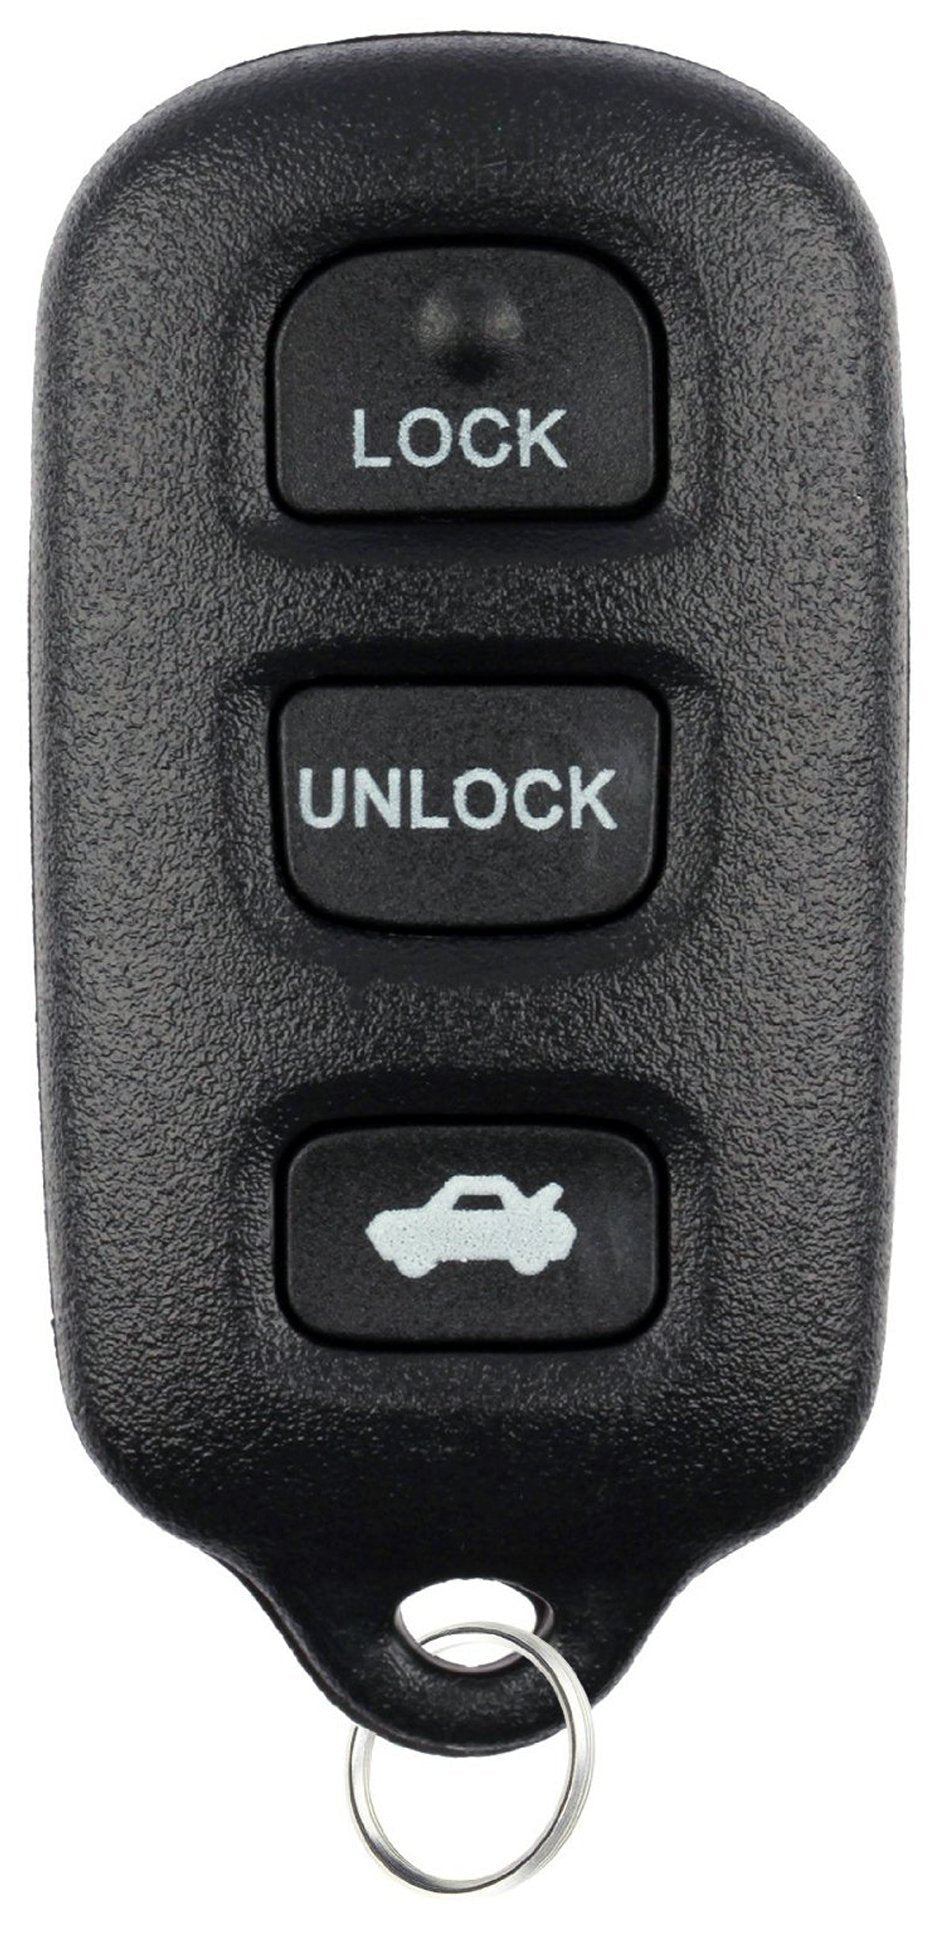  [AUSTRALIA] - KeylessOption Keyless Entry Remote Control Fob Car Key Replacement for GQ43VT14T